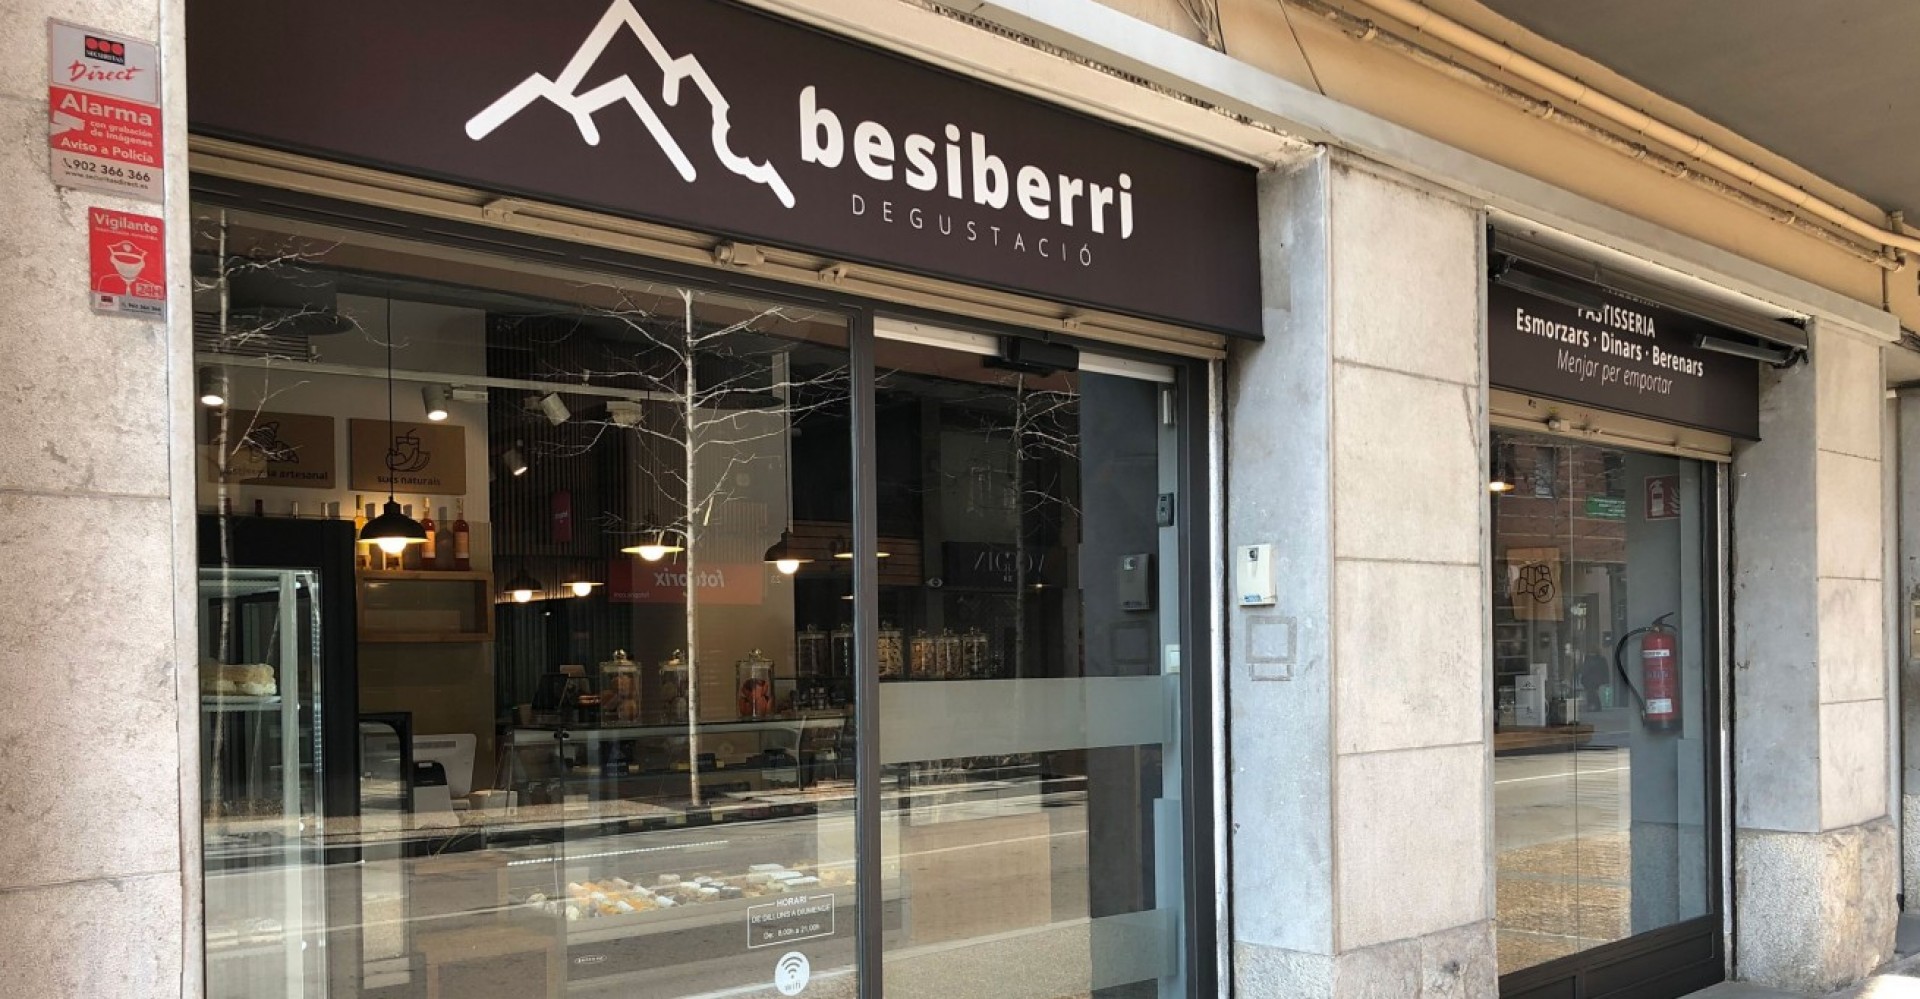 Besiberri-Degustació